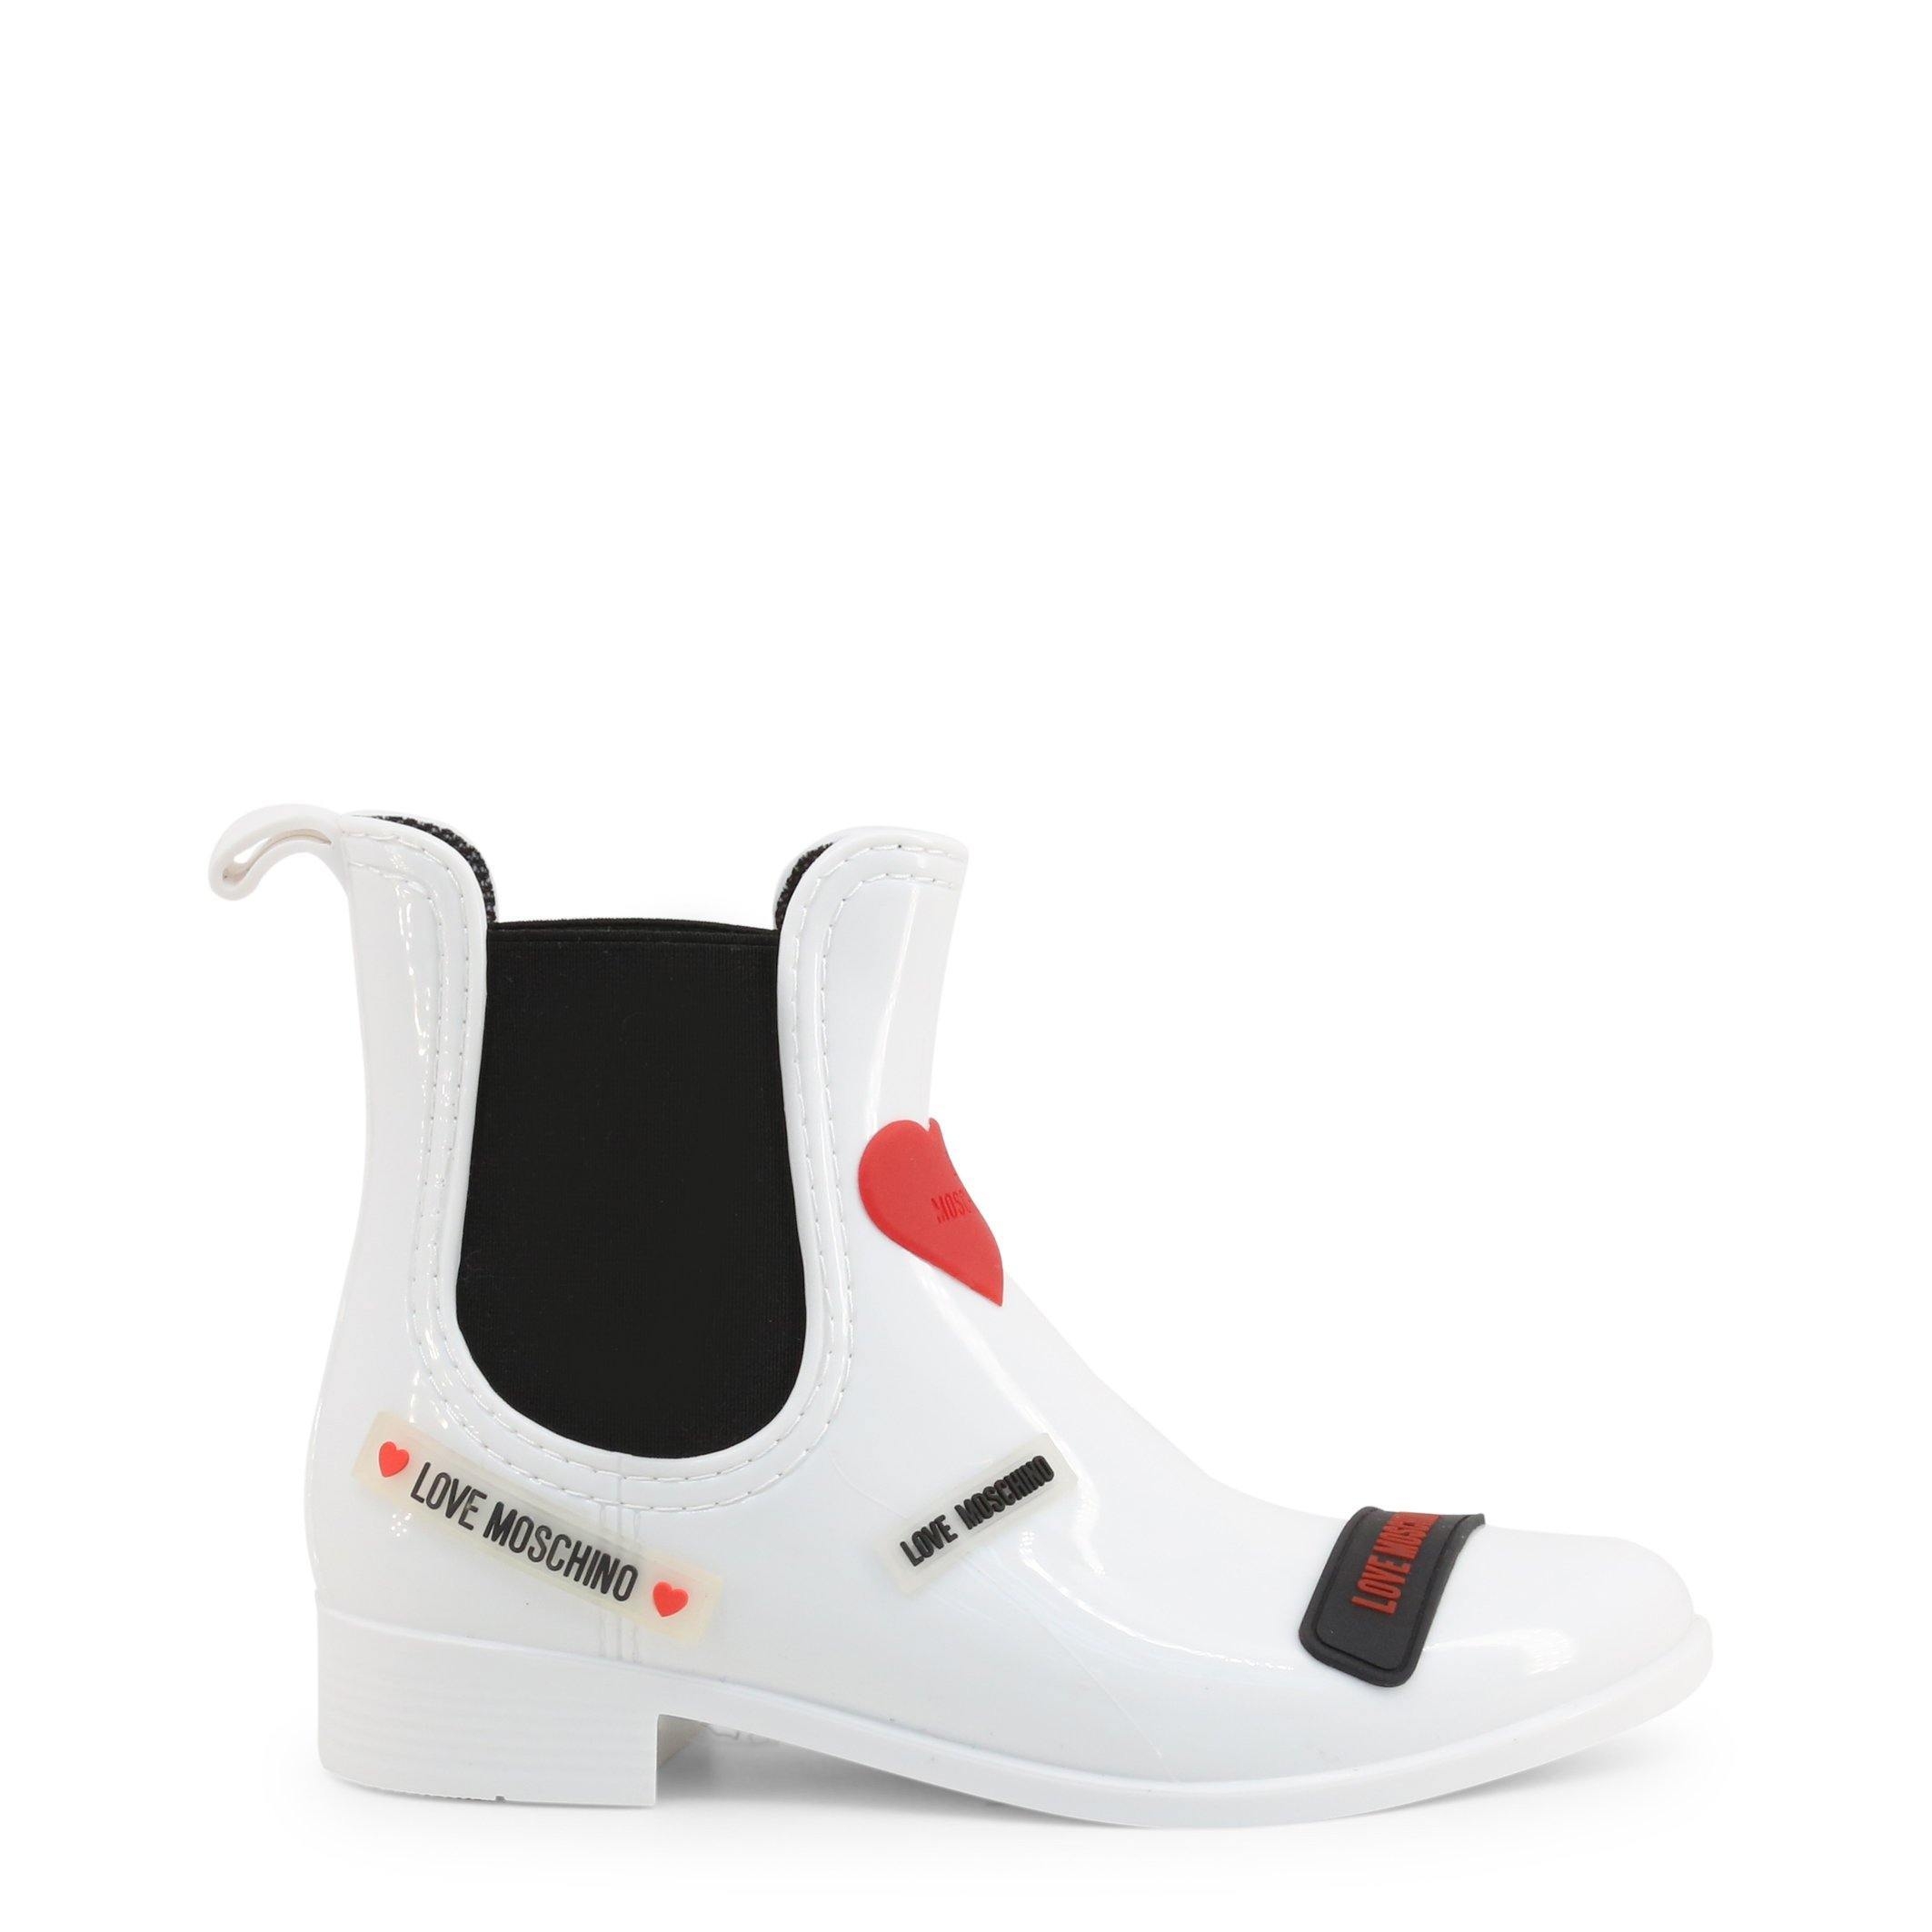 Love Moschino – Women’s ankle boots in white or black – JA21043G1BIR – white – EU 37